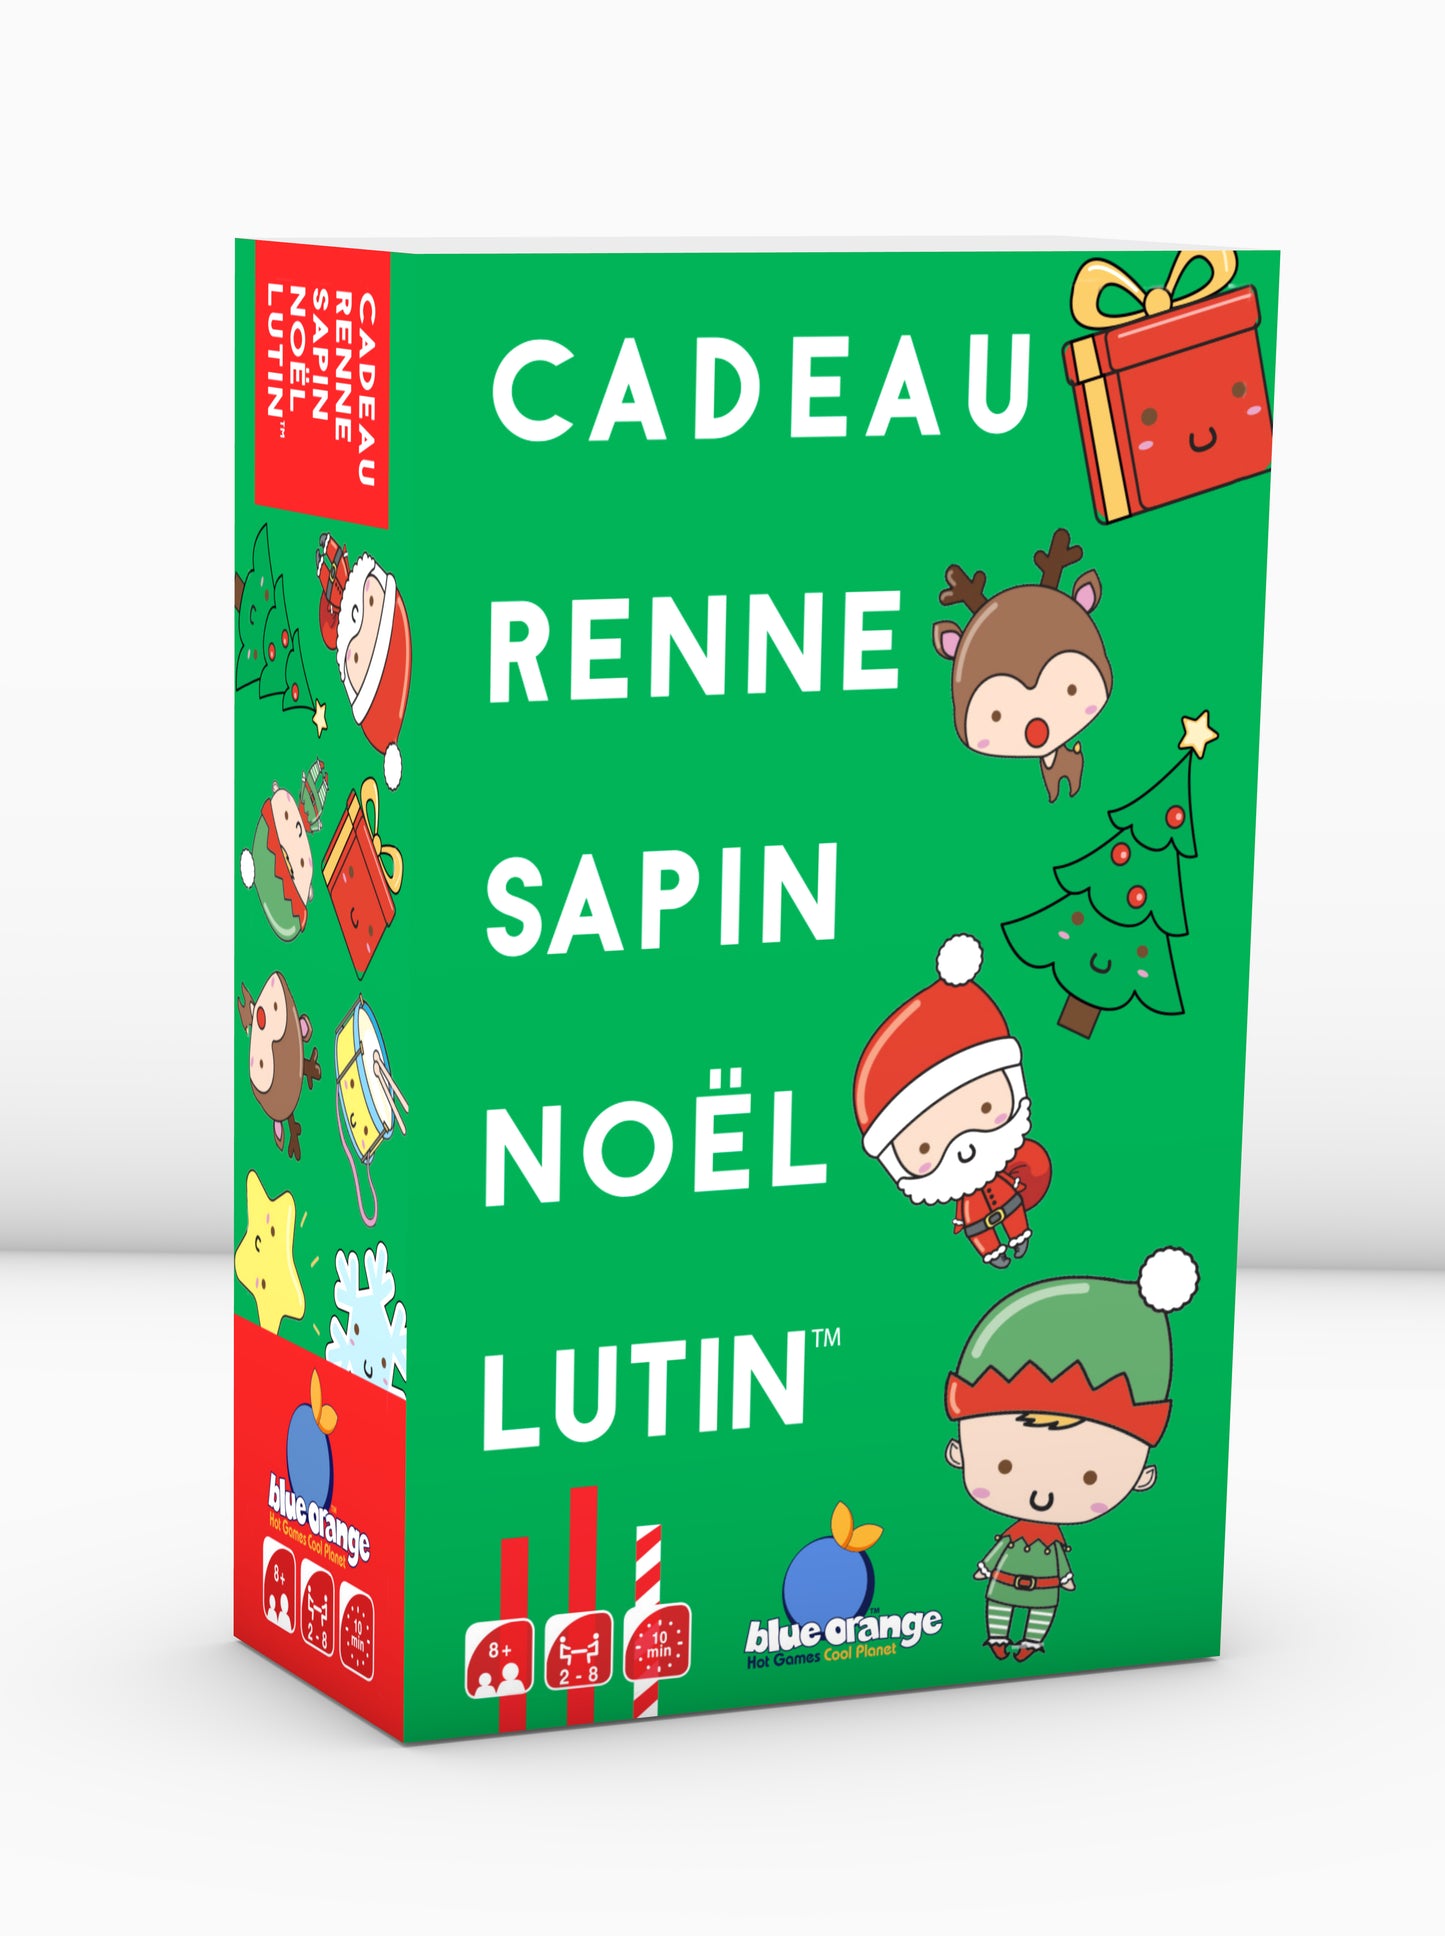 Cadeau Renne Sapin Noël Lutin - version française